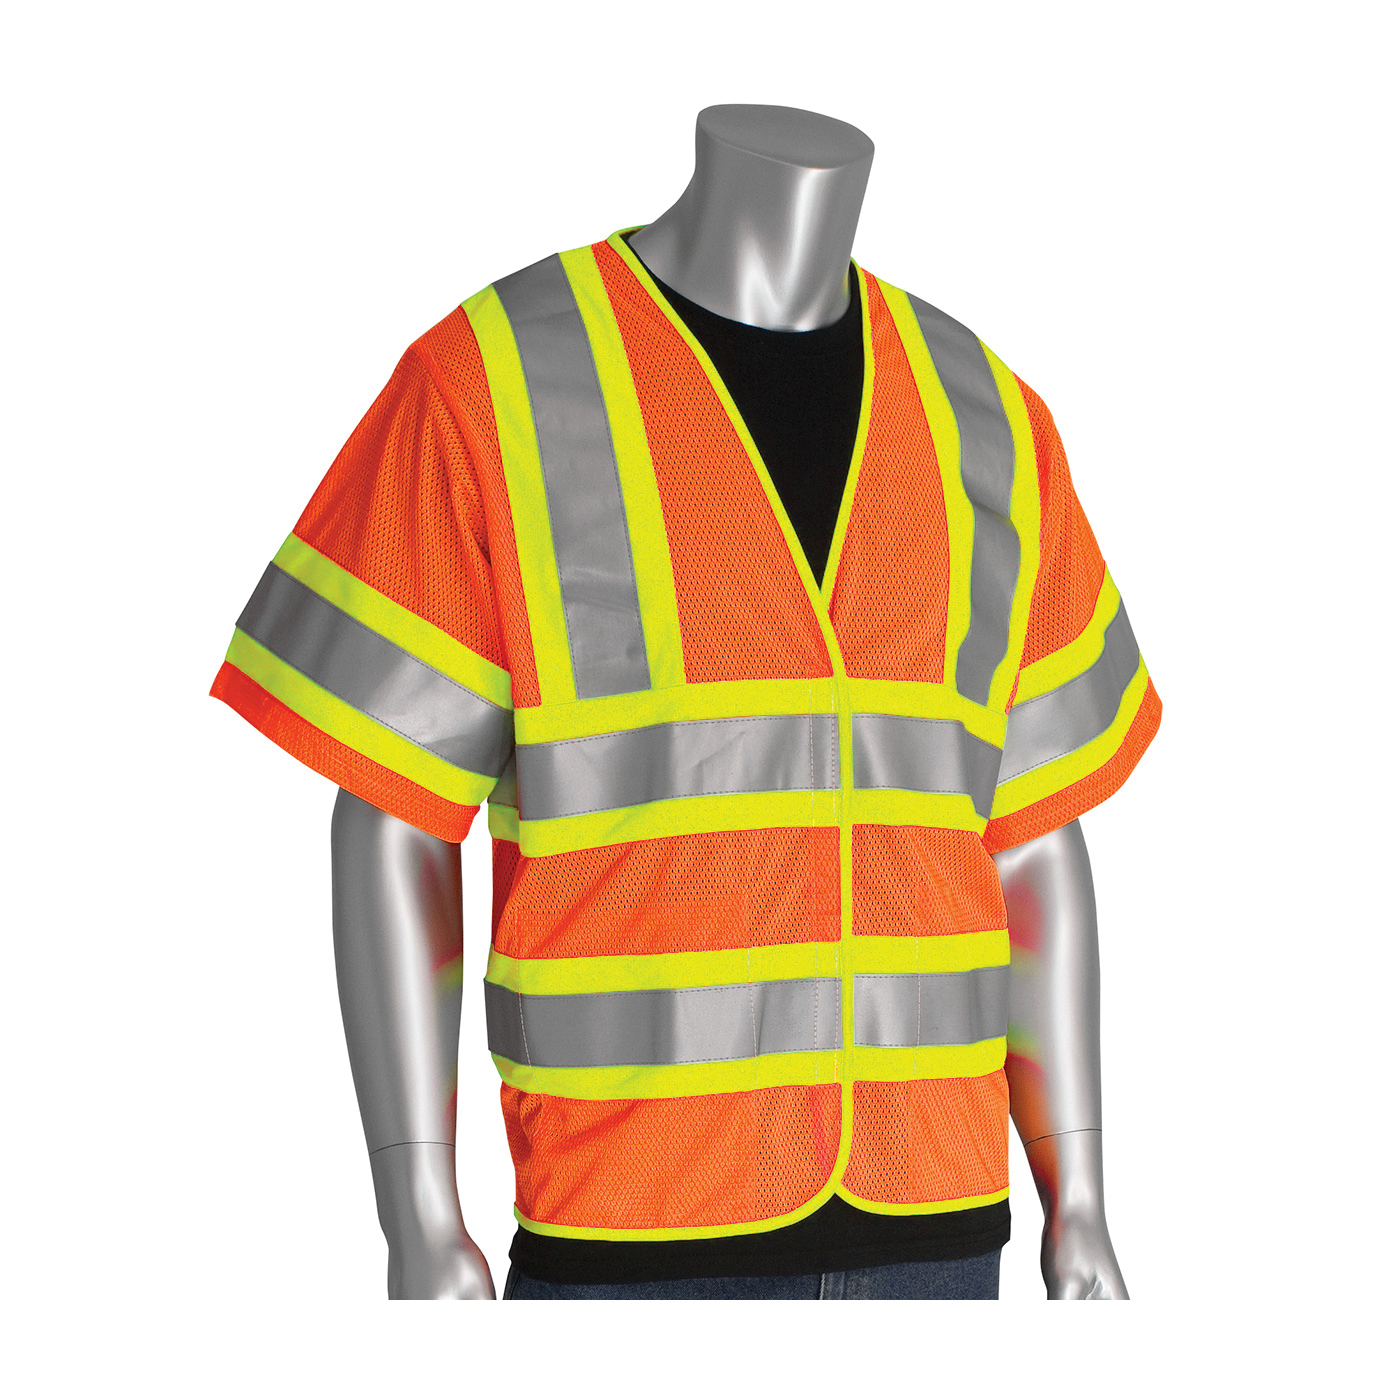 PIP® SafetyGear 305-HSVPFROR-L/XL 2-Tone FR Treated Safety Vest, L to XL, Hi-Viz Orange, Polyester, Hook and Loop Closure, 2 Pockets, ANSI Class: Class 3, ANSI Specified